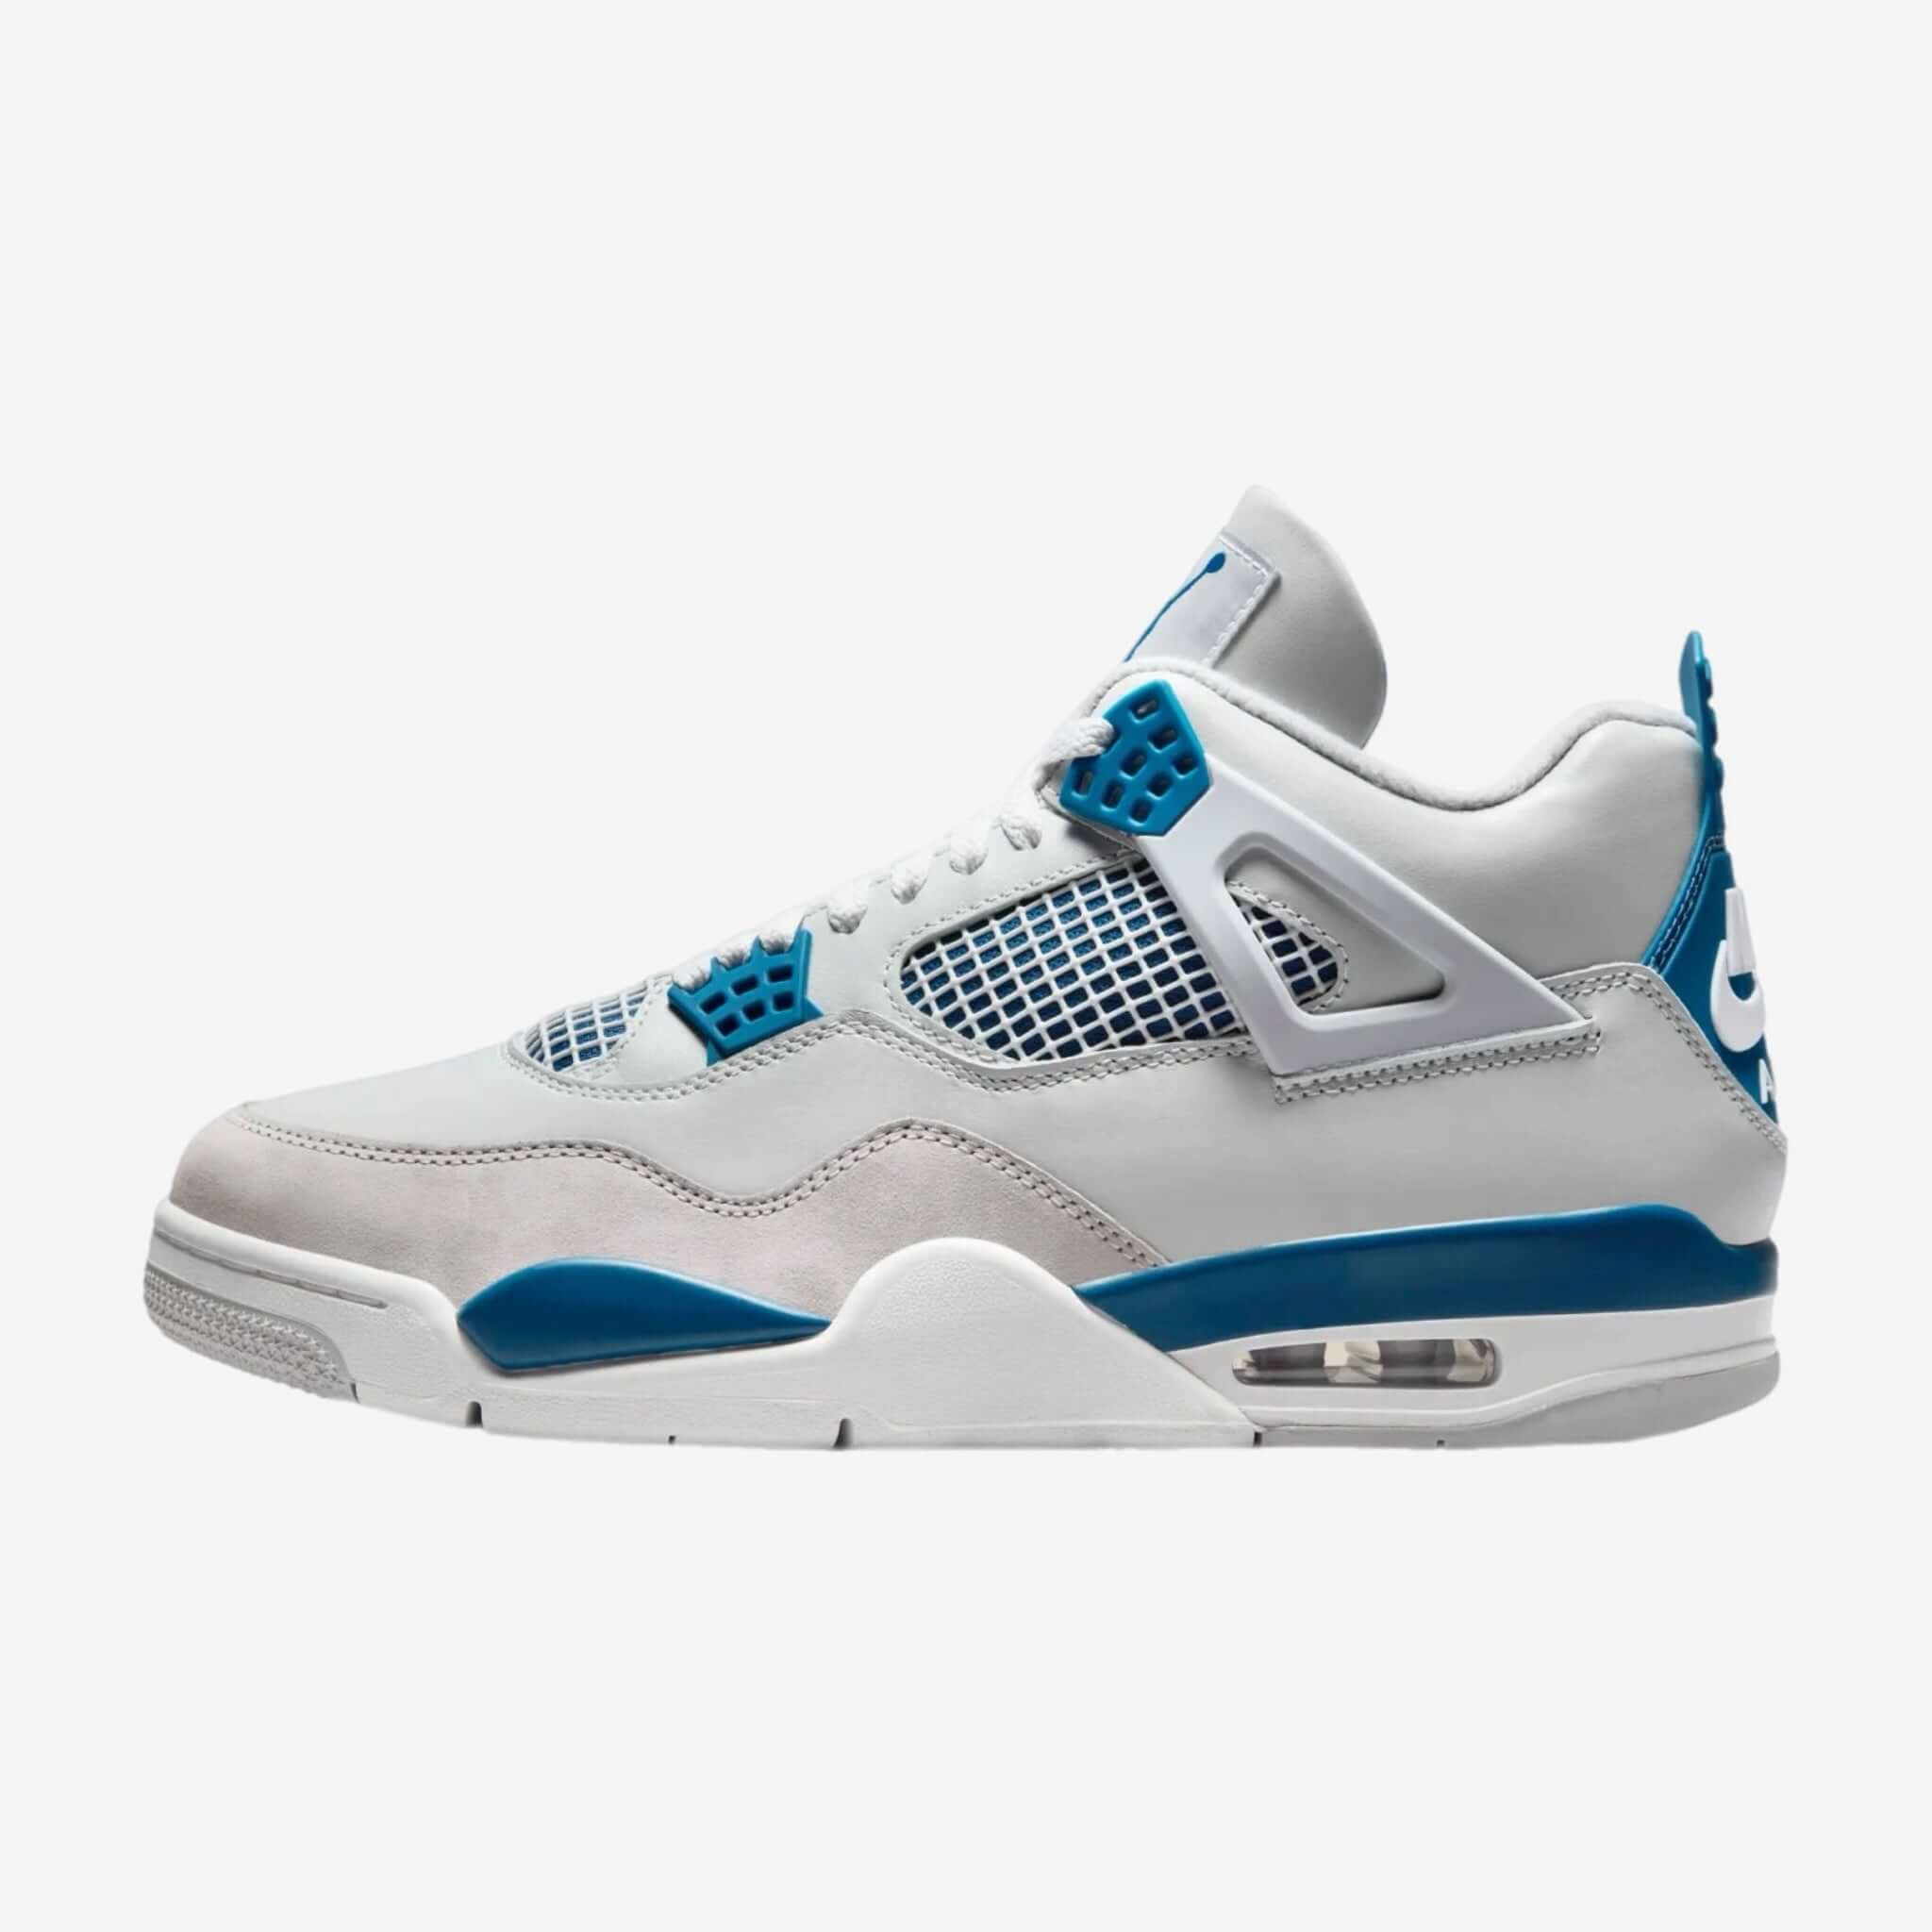 Air Jordan 4 “Military Blue”